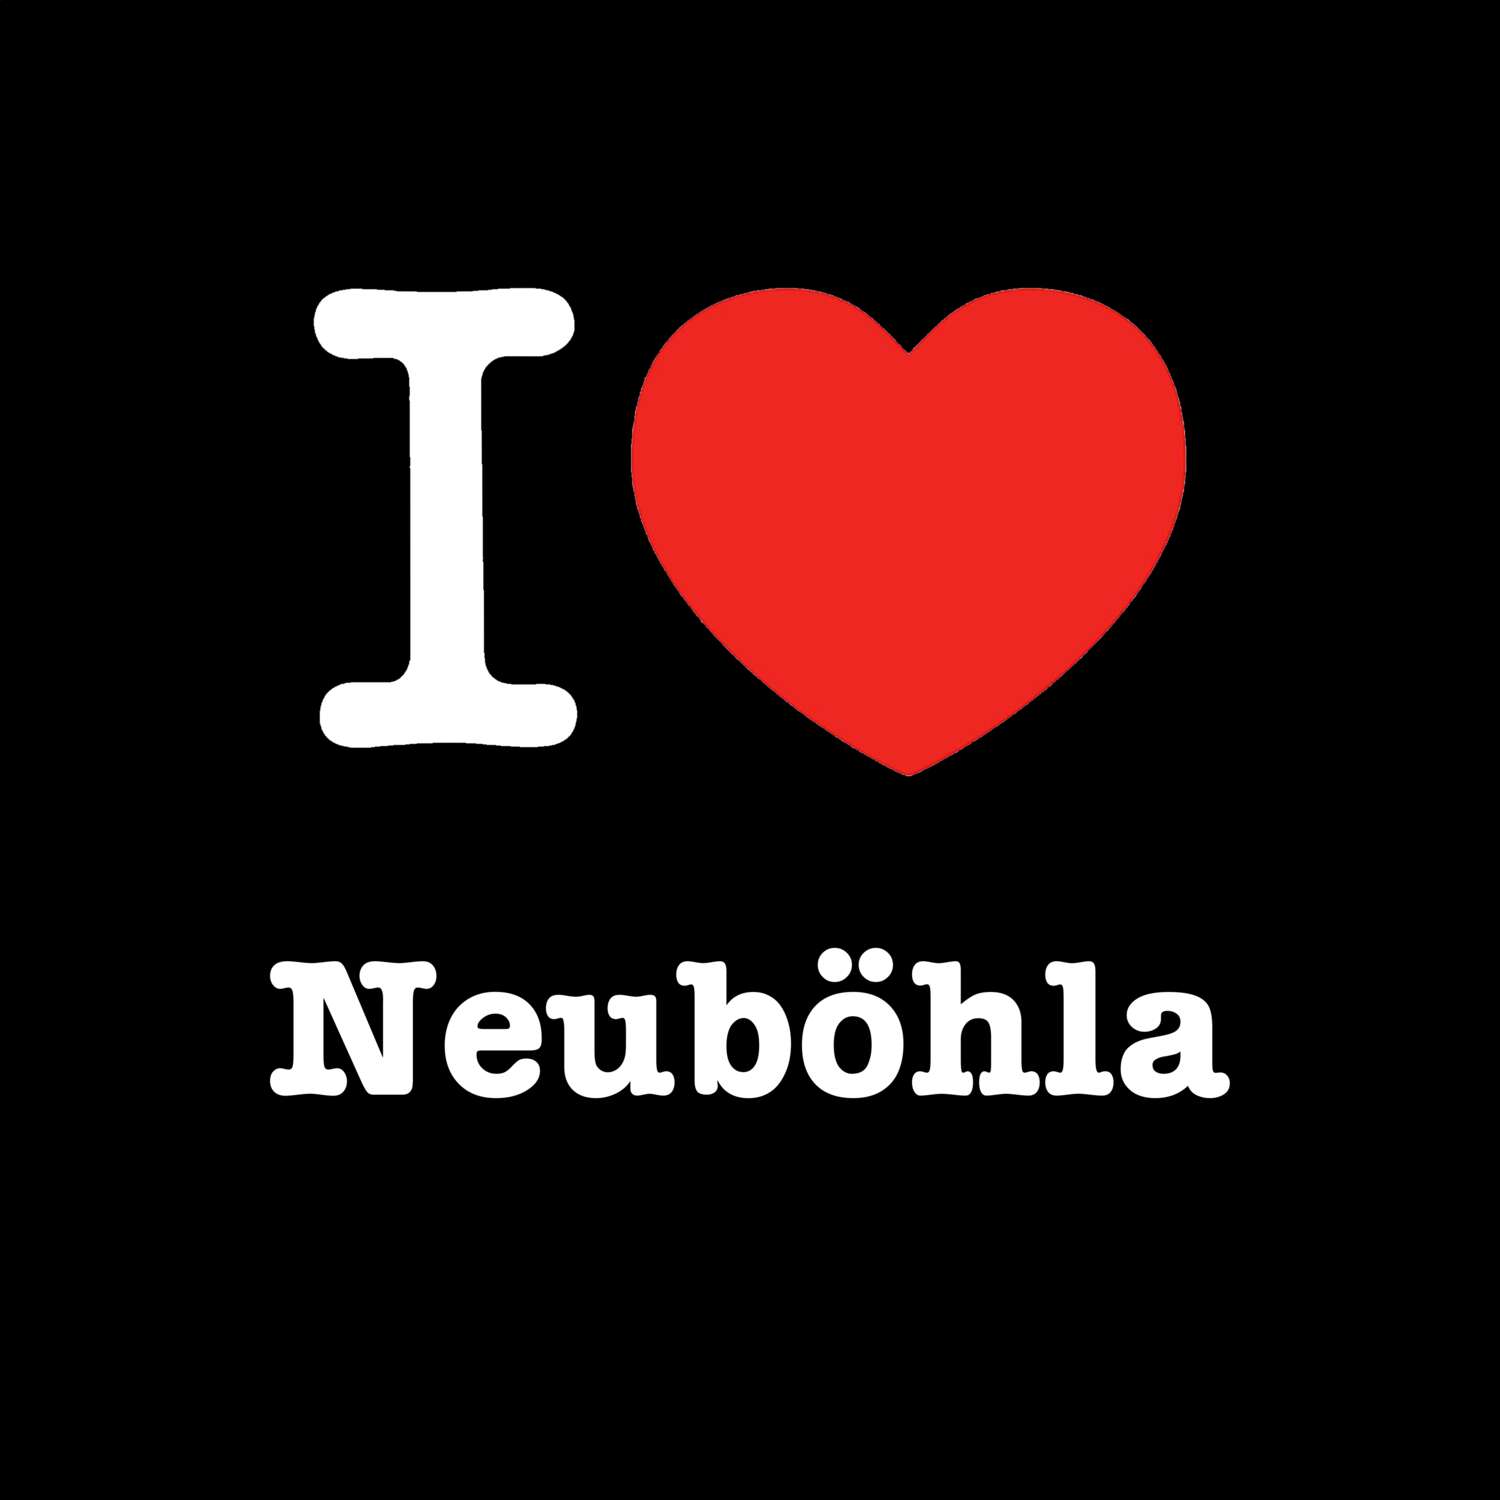 Neuböhla T-Shirt »I love«